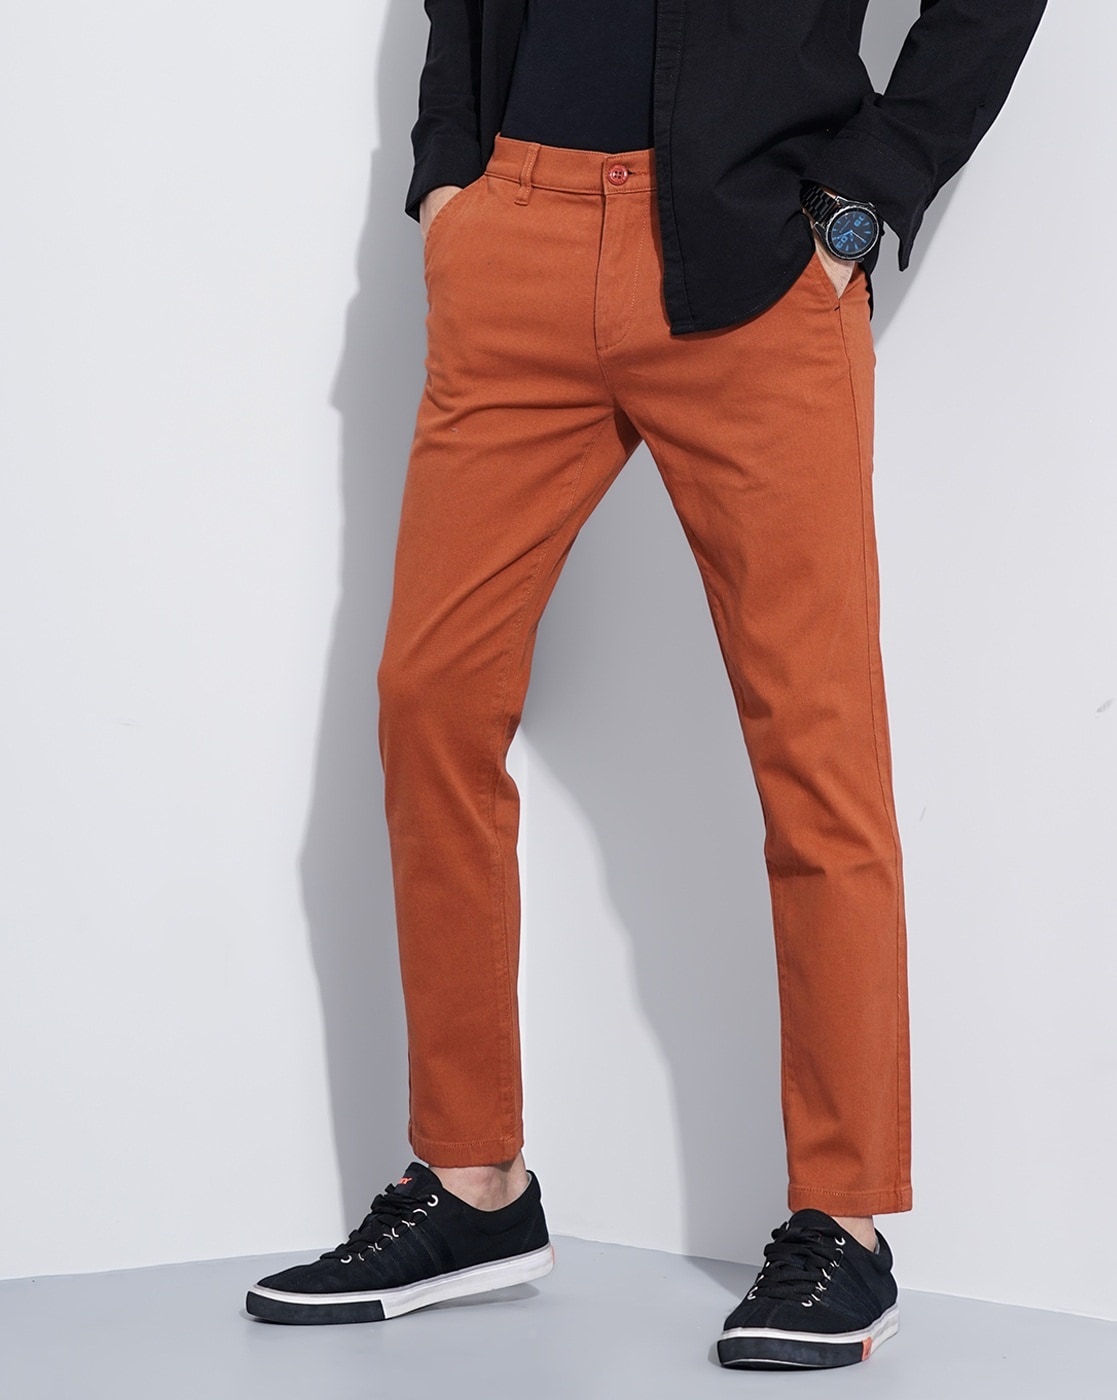 Clogger Zero Gen2 Light and Cool Men's Hi Vis Orange Chainsaw Pants